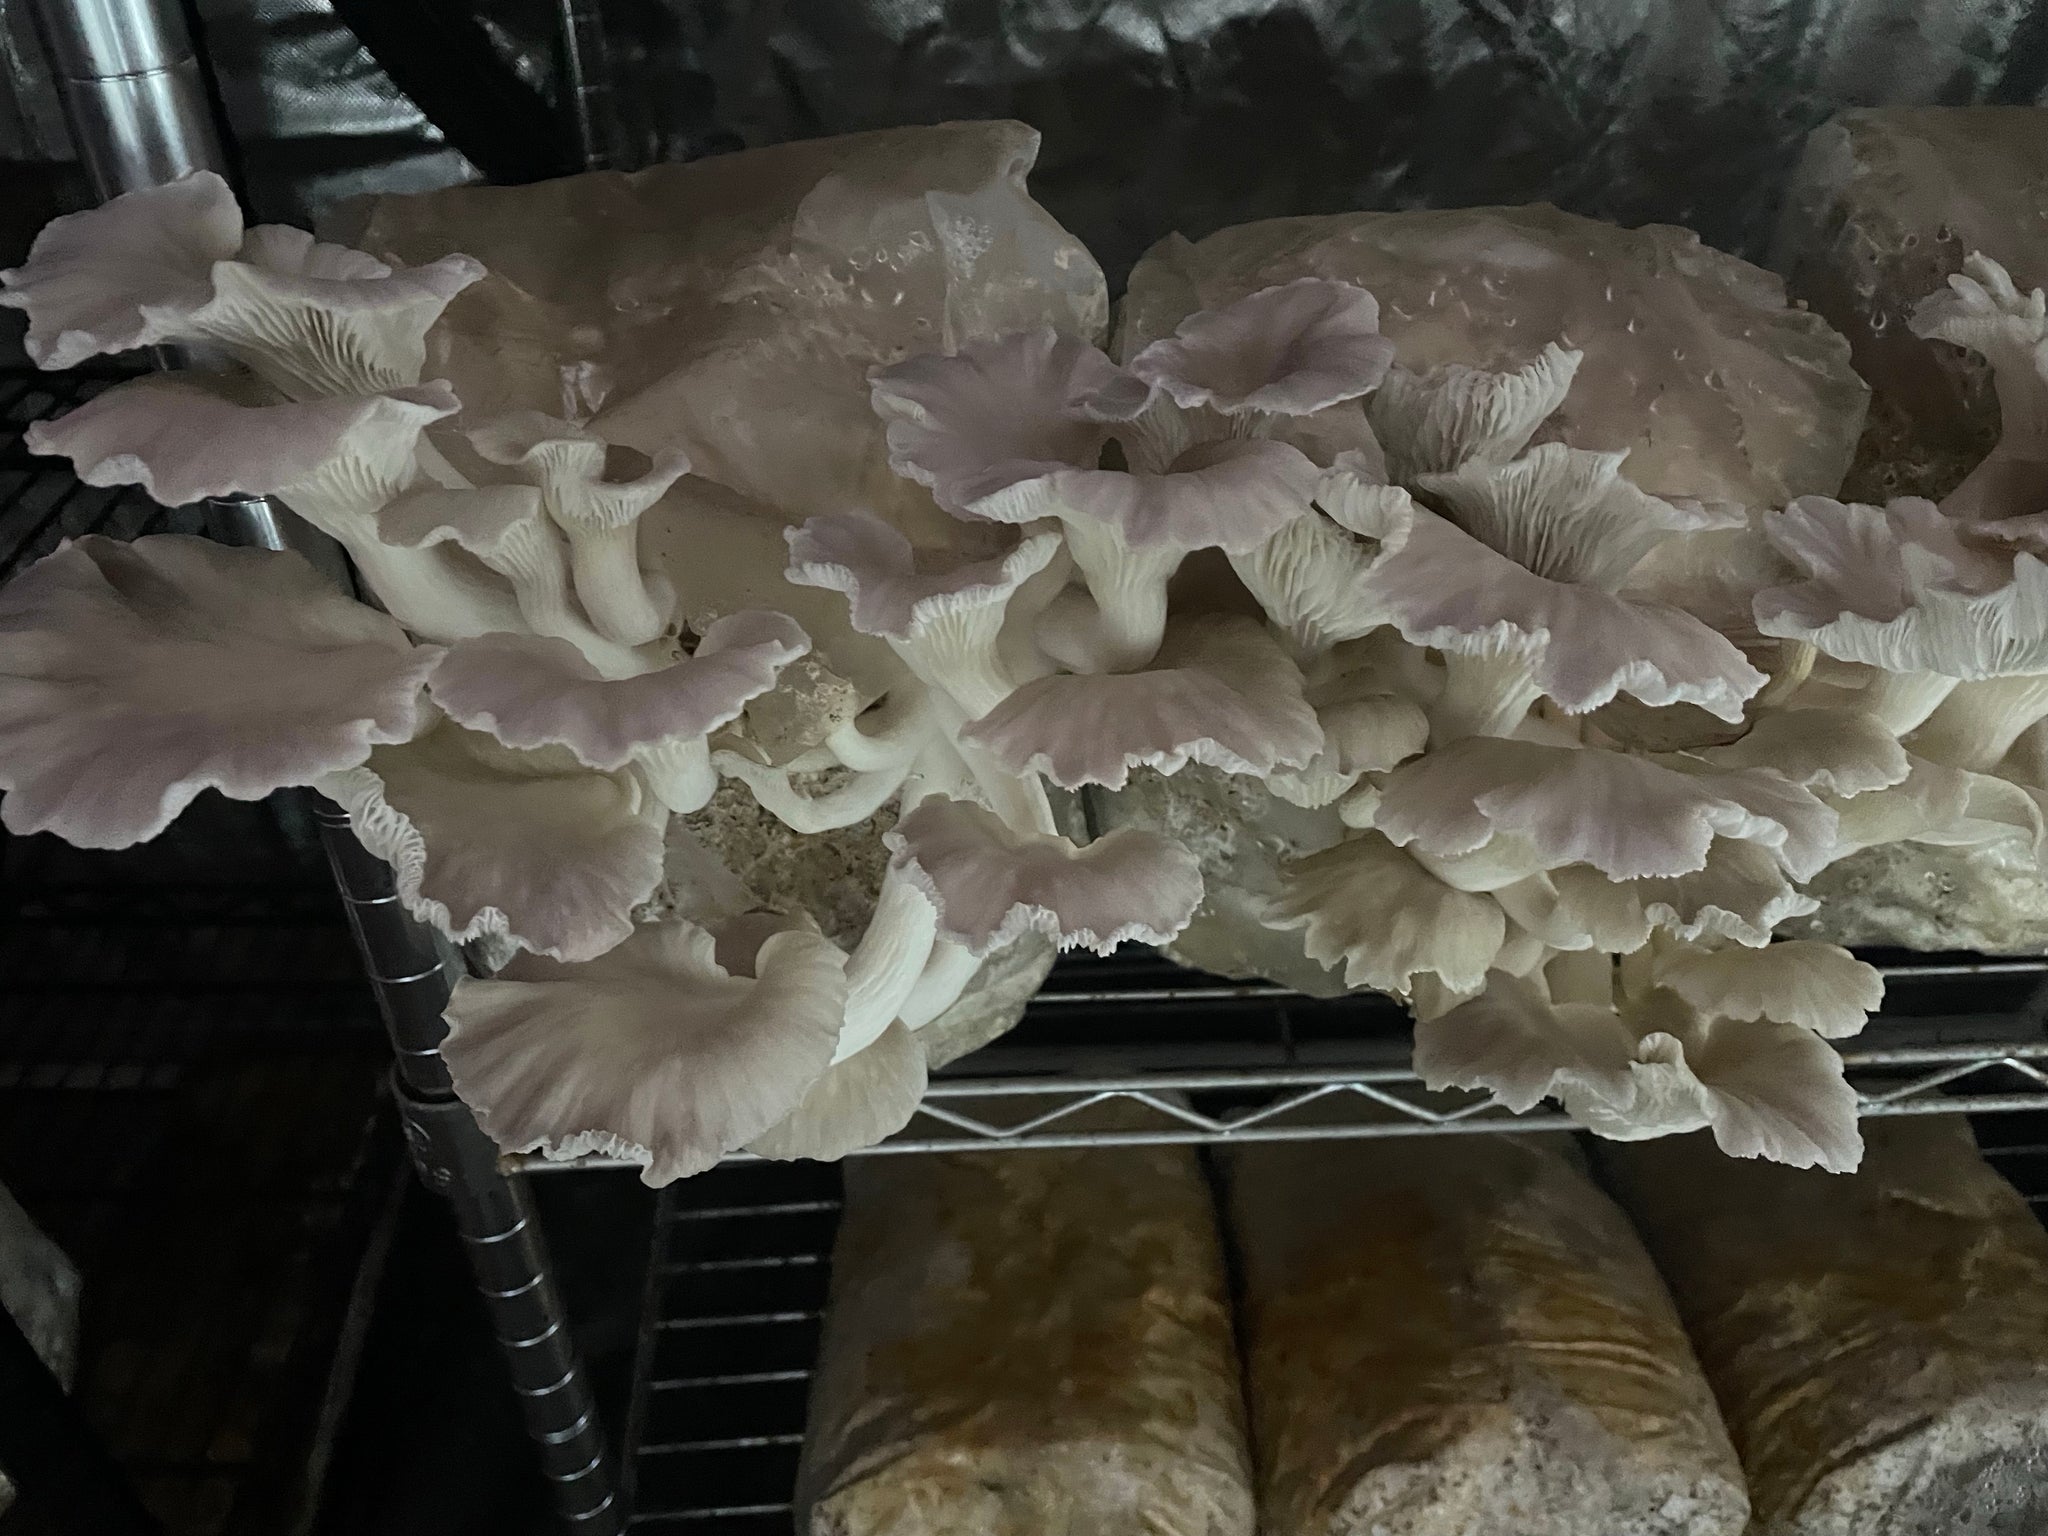 Tree oyster mushroom